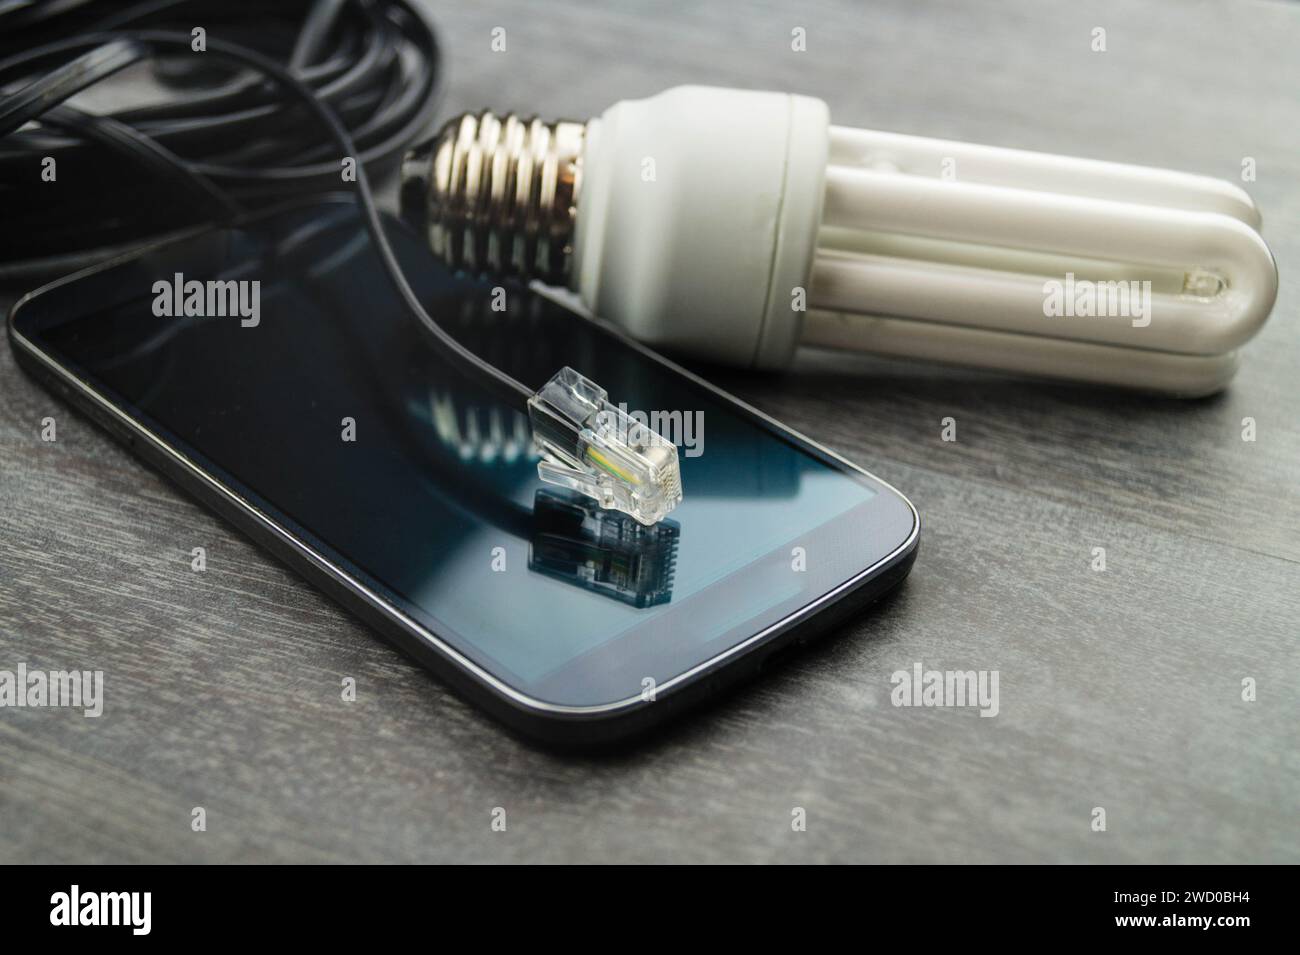 Energy-saving lamp, smart phone and network plug, symbolic image for smart home Stock Photo